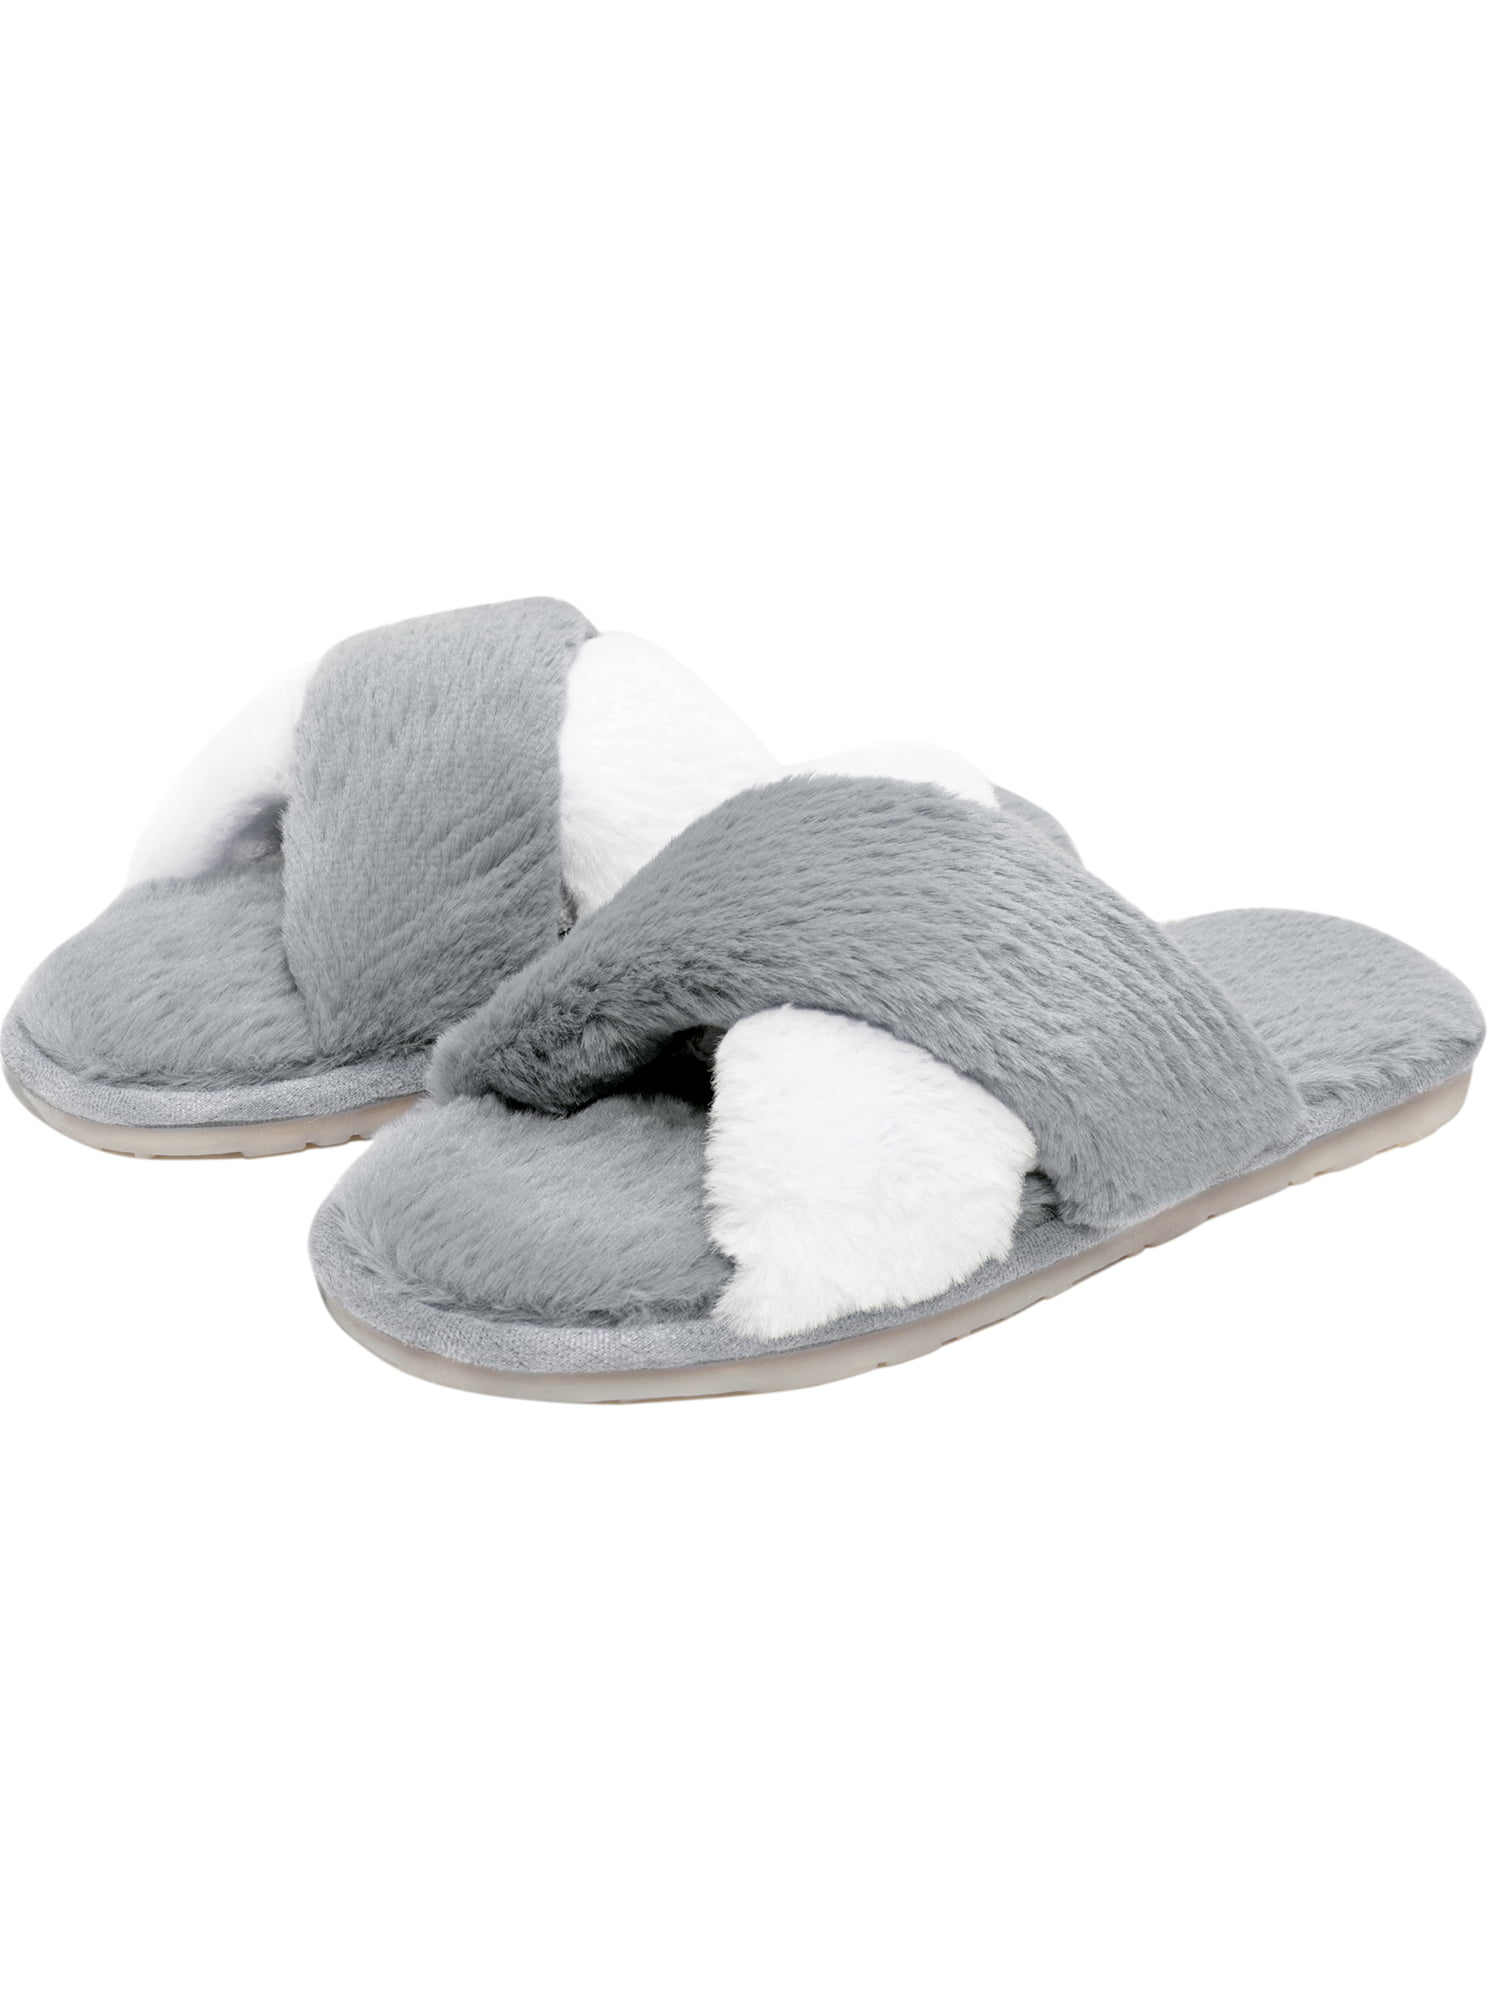 Northside Women's NEW Mason Fur Slipper Comfort Slip On Cozy Home Slides Scuffs 